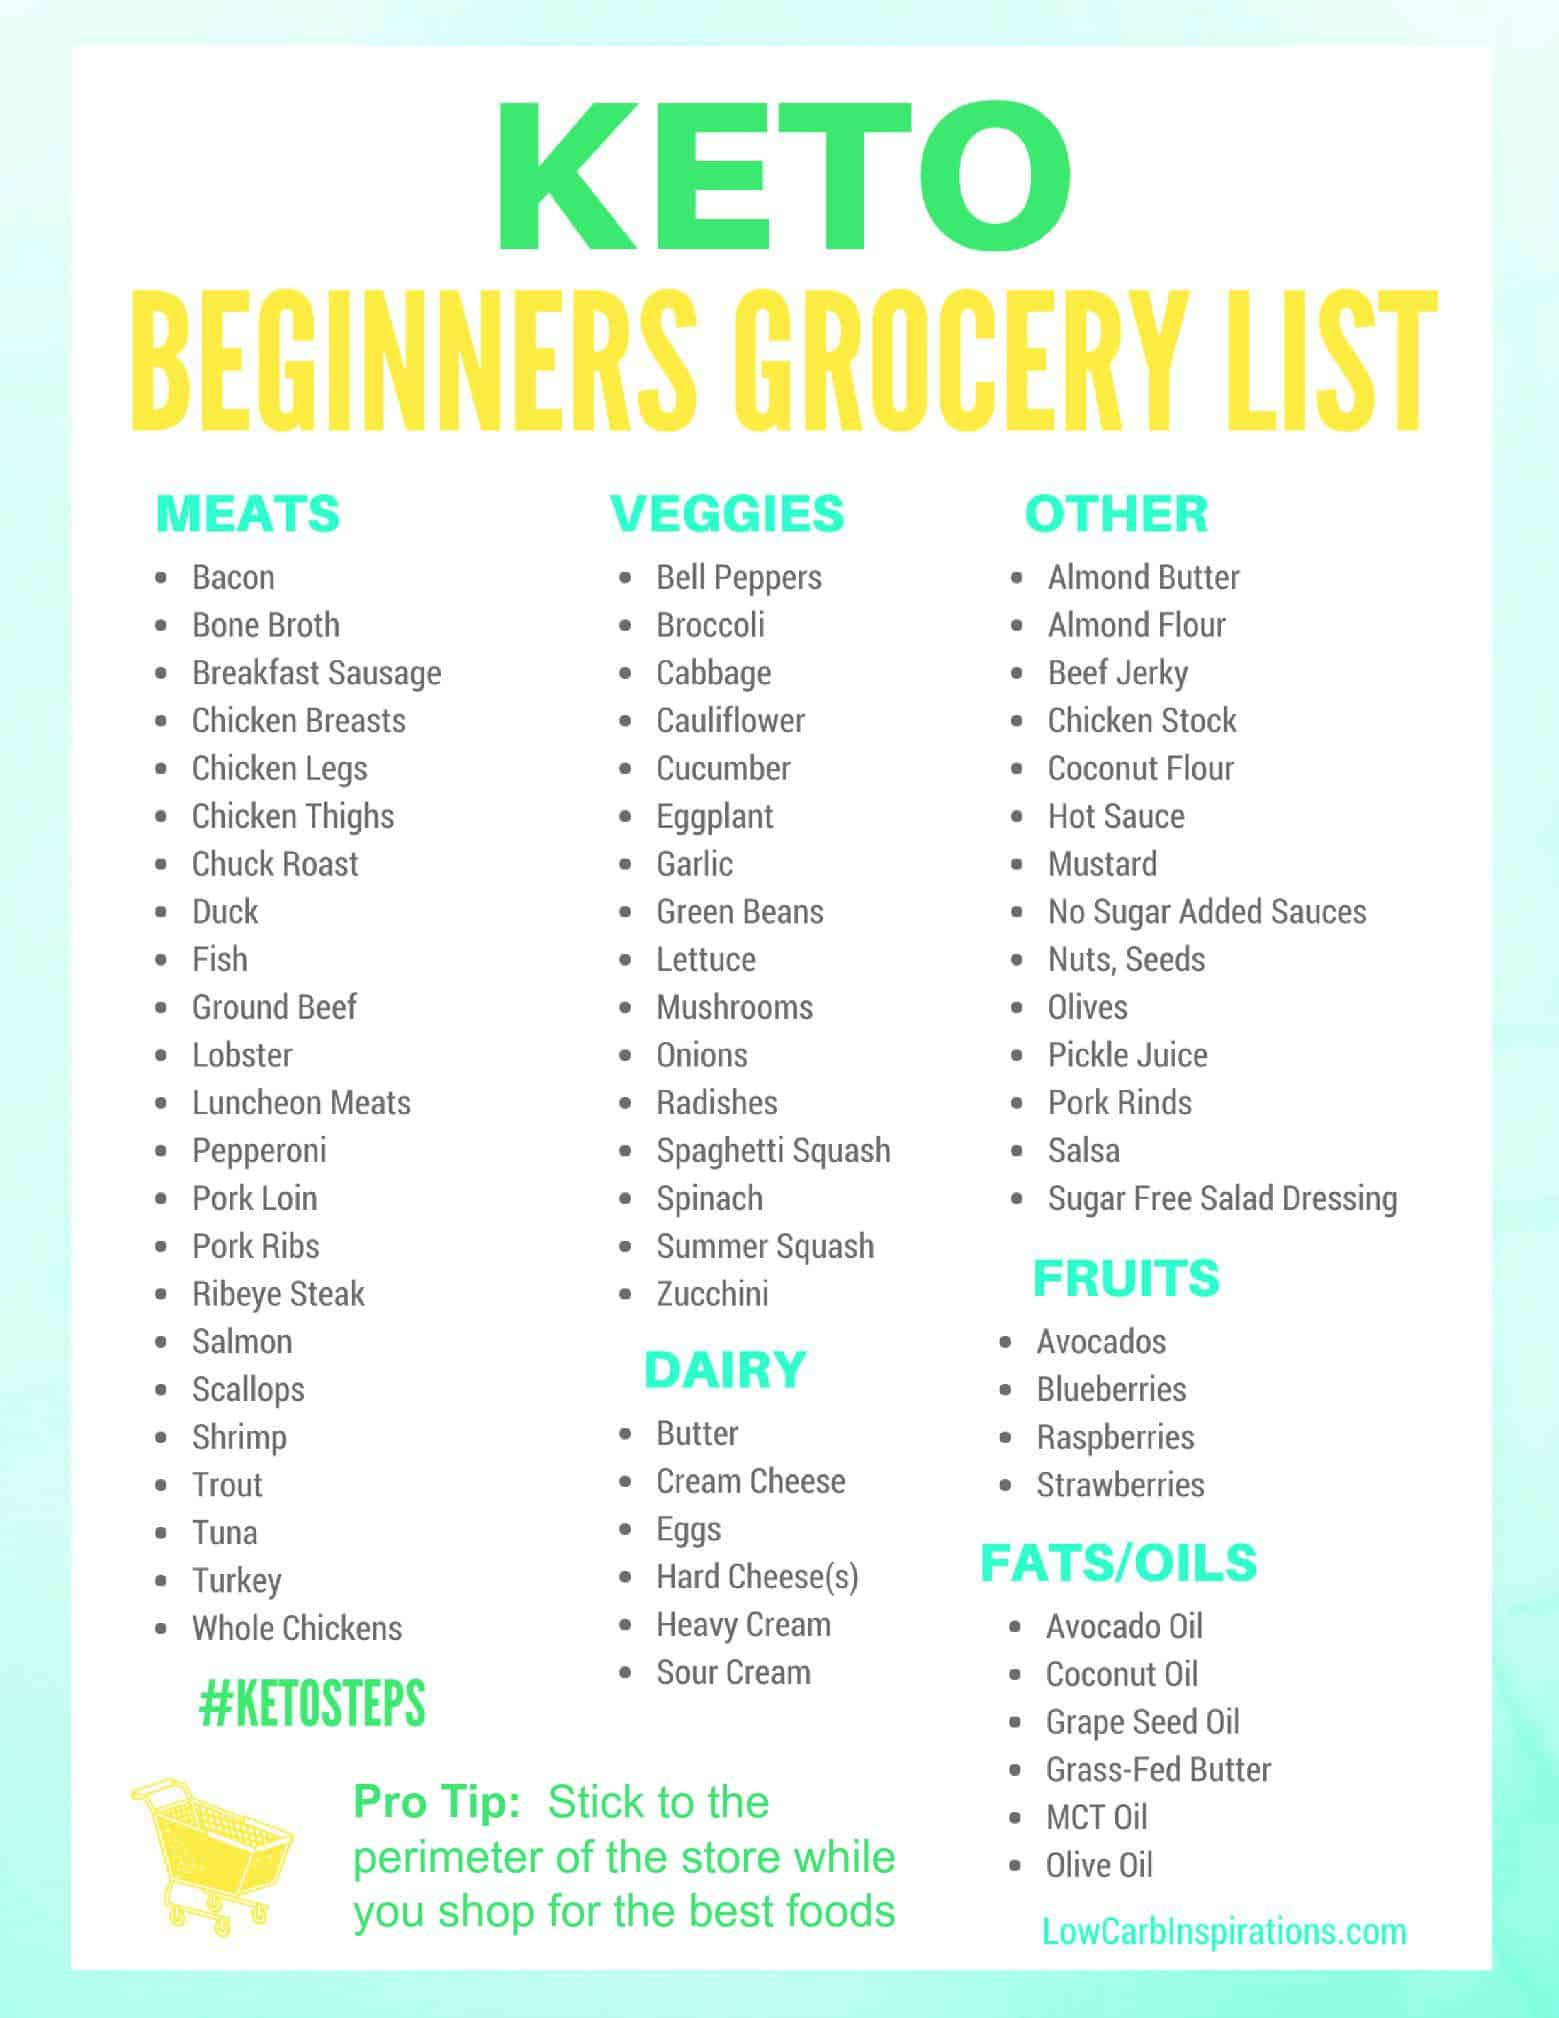 Keto Diet For Beginners Meals
 Keto Grocery List for Beginners iSaveA2Z